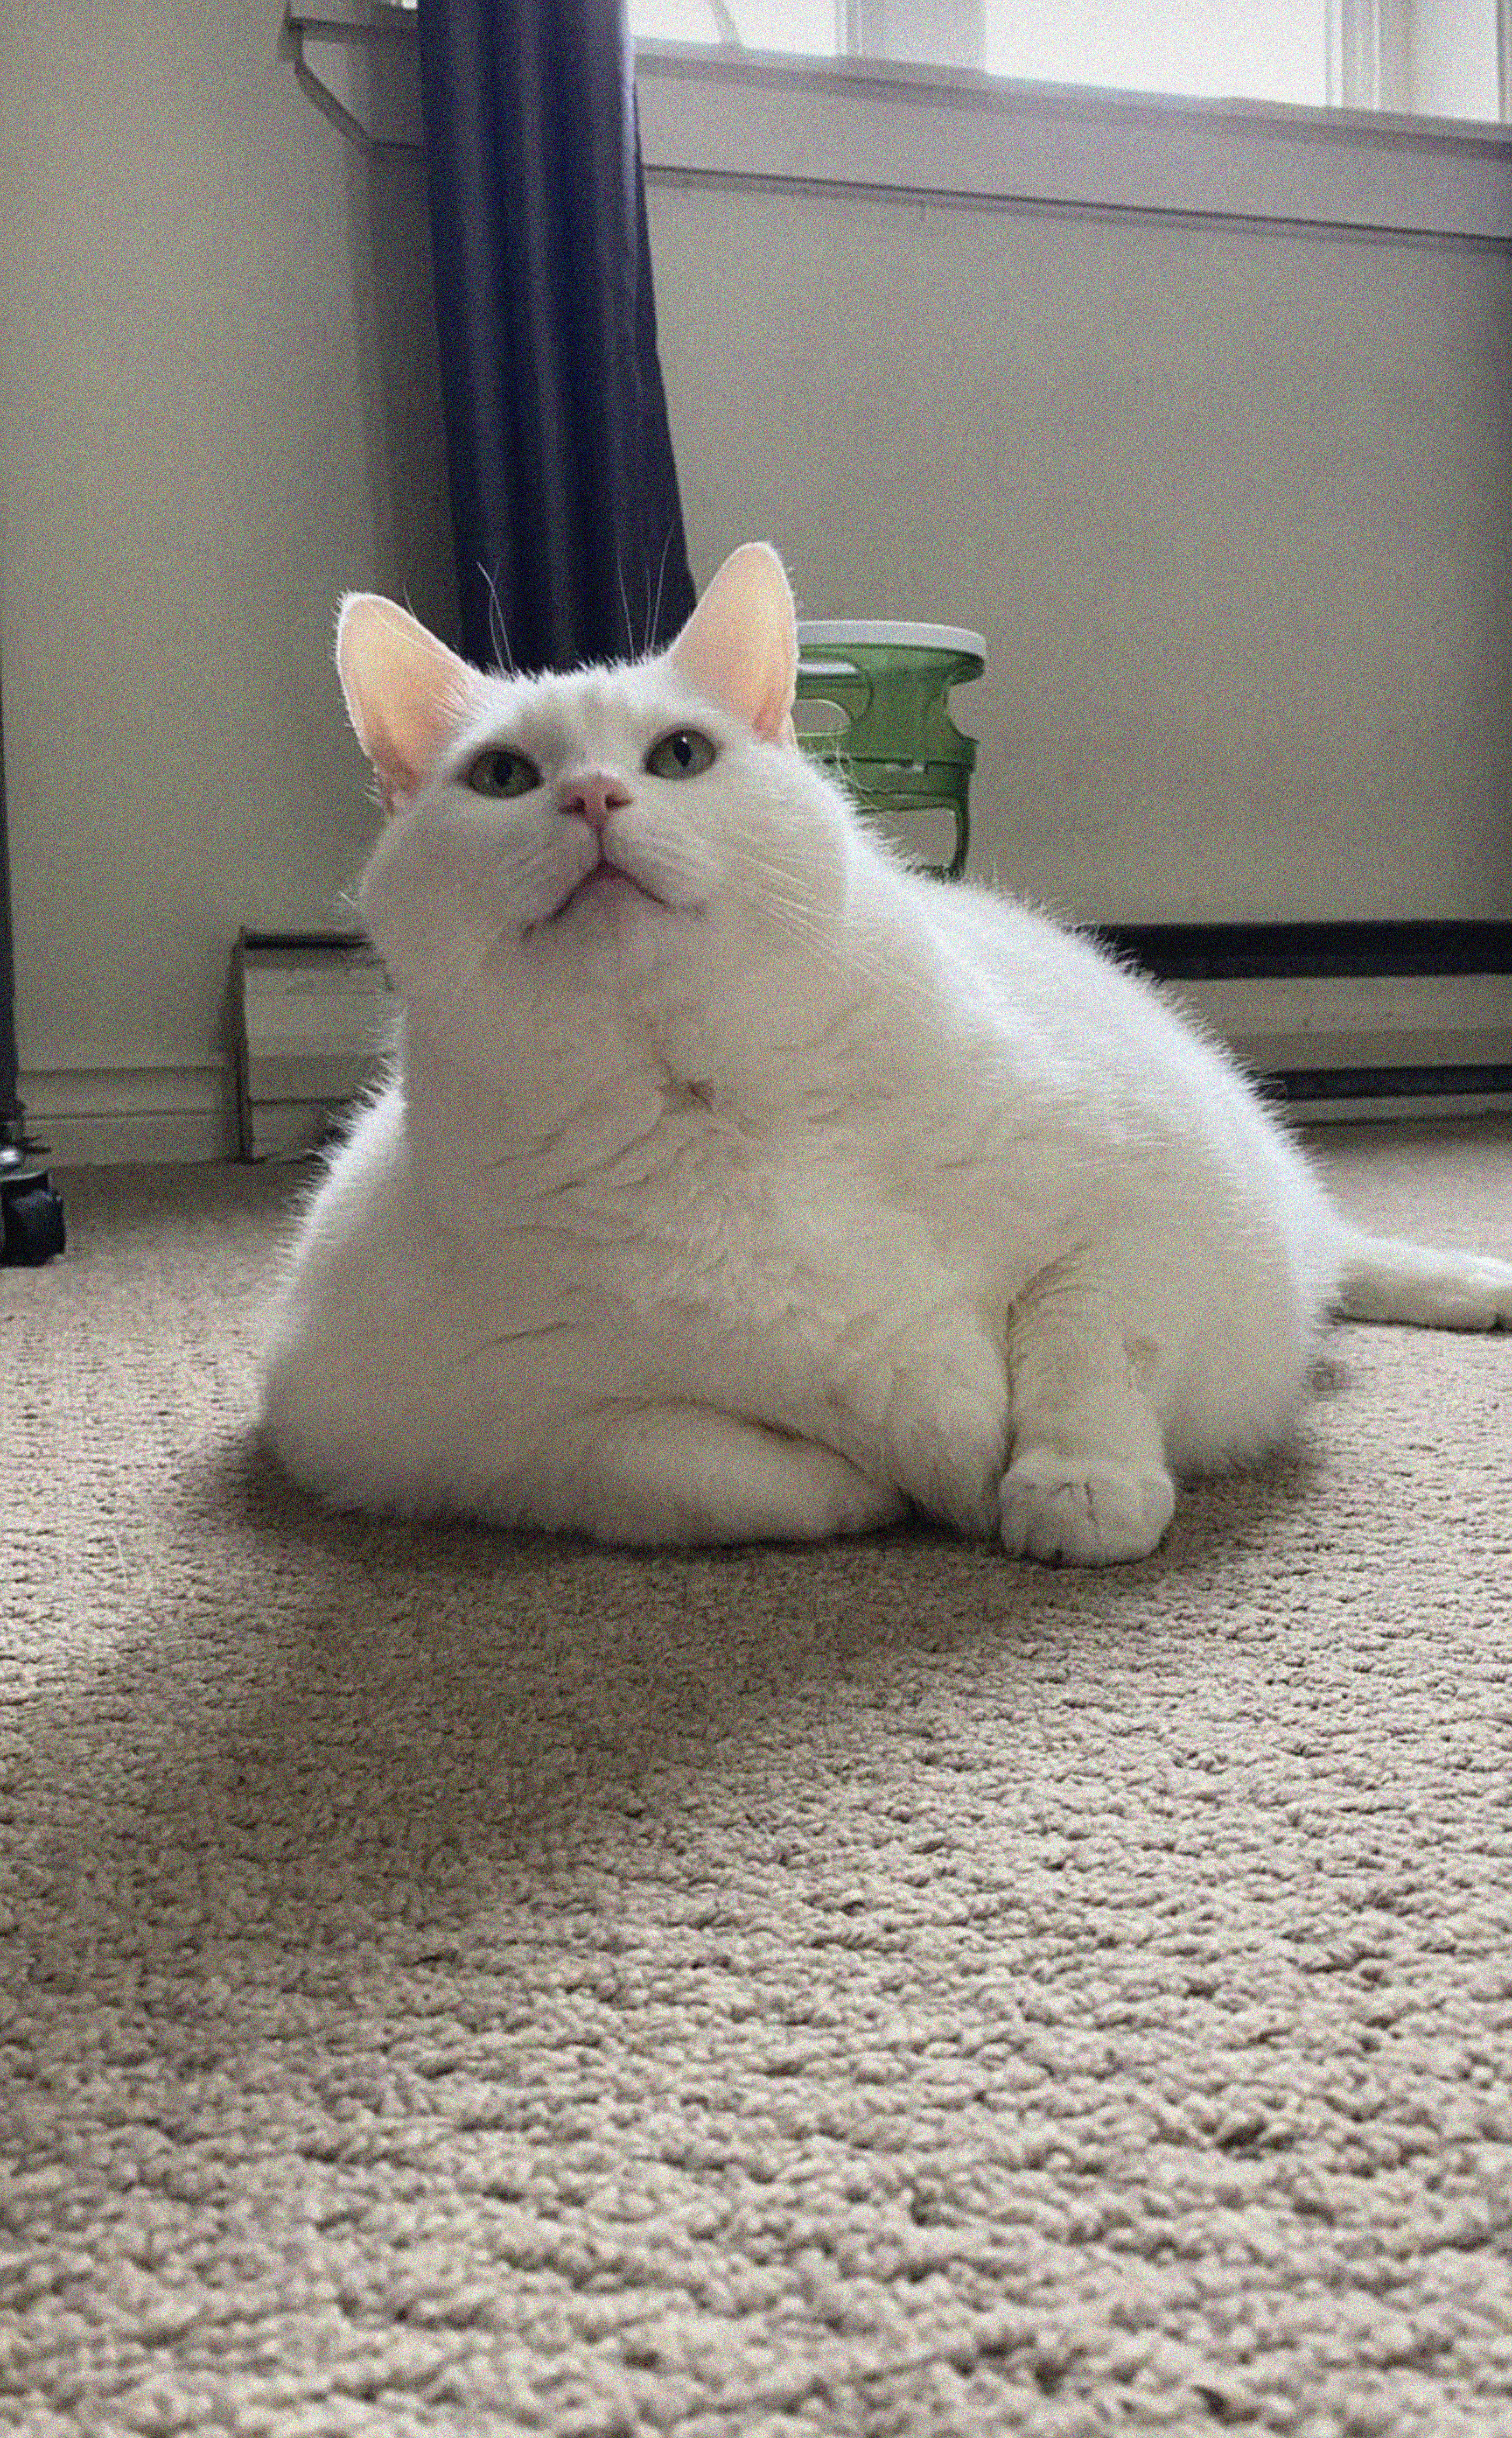 King-duncan Fat-cat Cat Glance Pet Fluffy